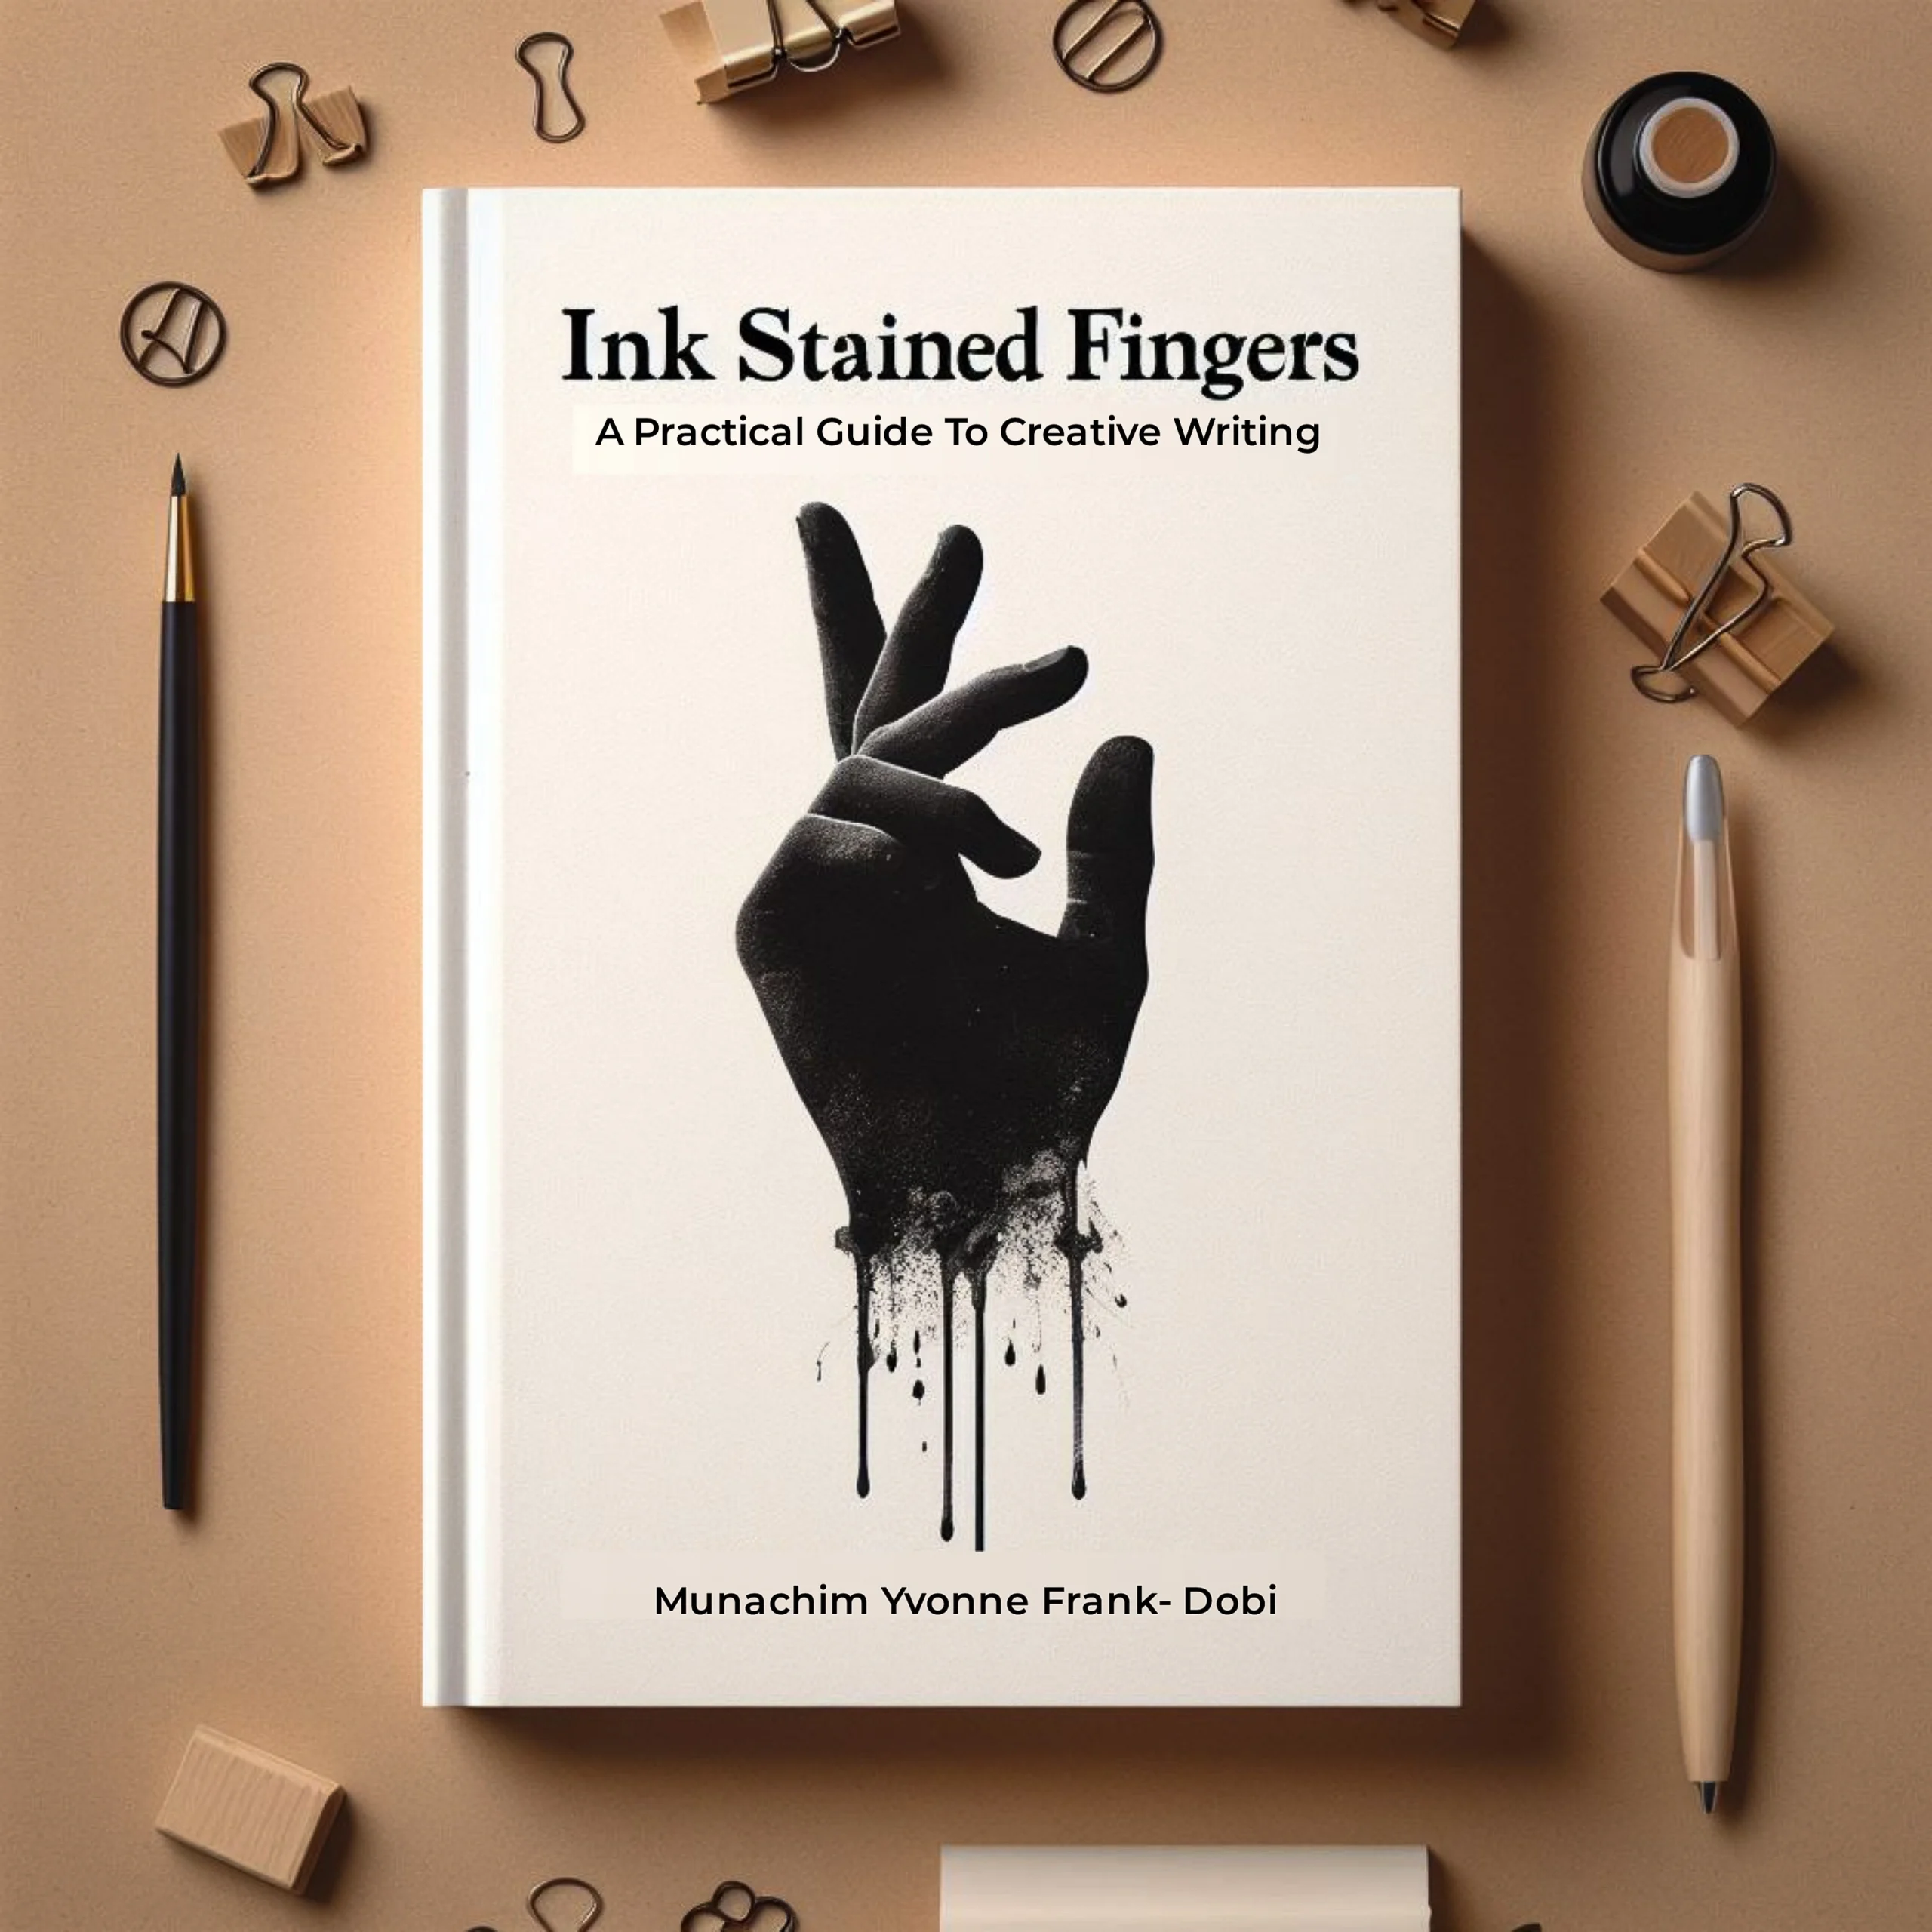 Ink-Stained Fingers by Munachim Yvonne Frank-Dobi